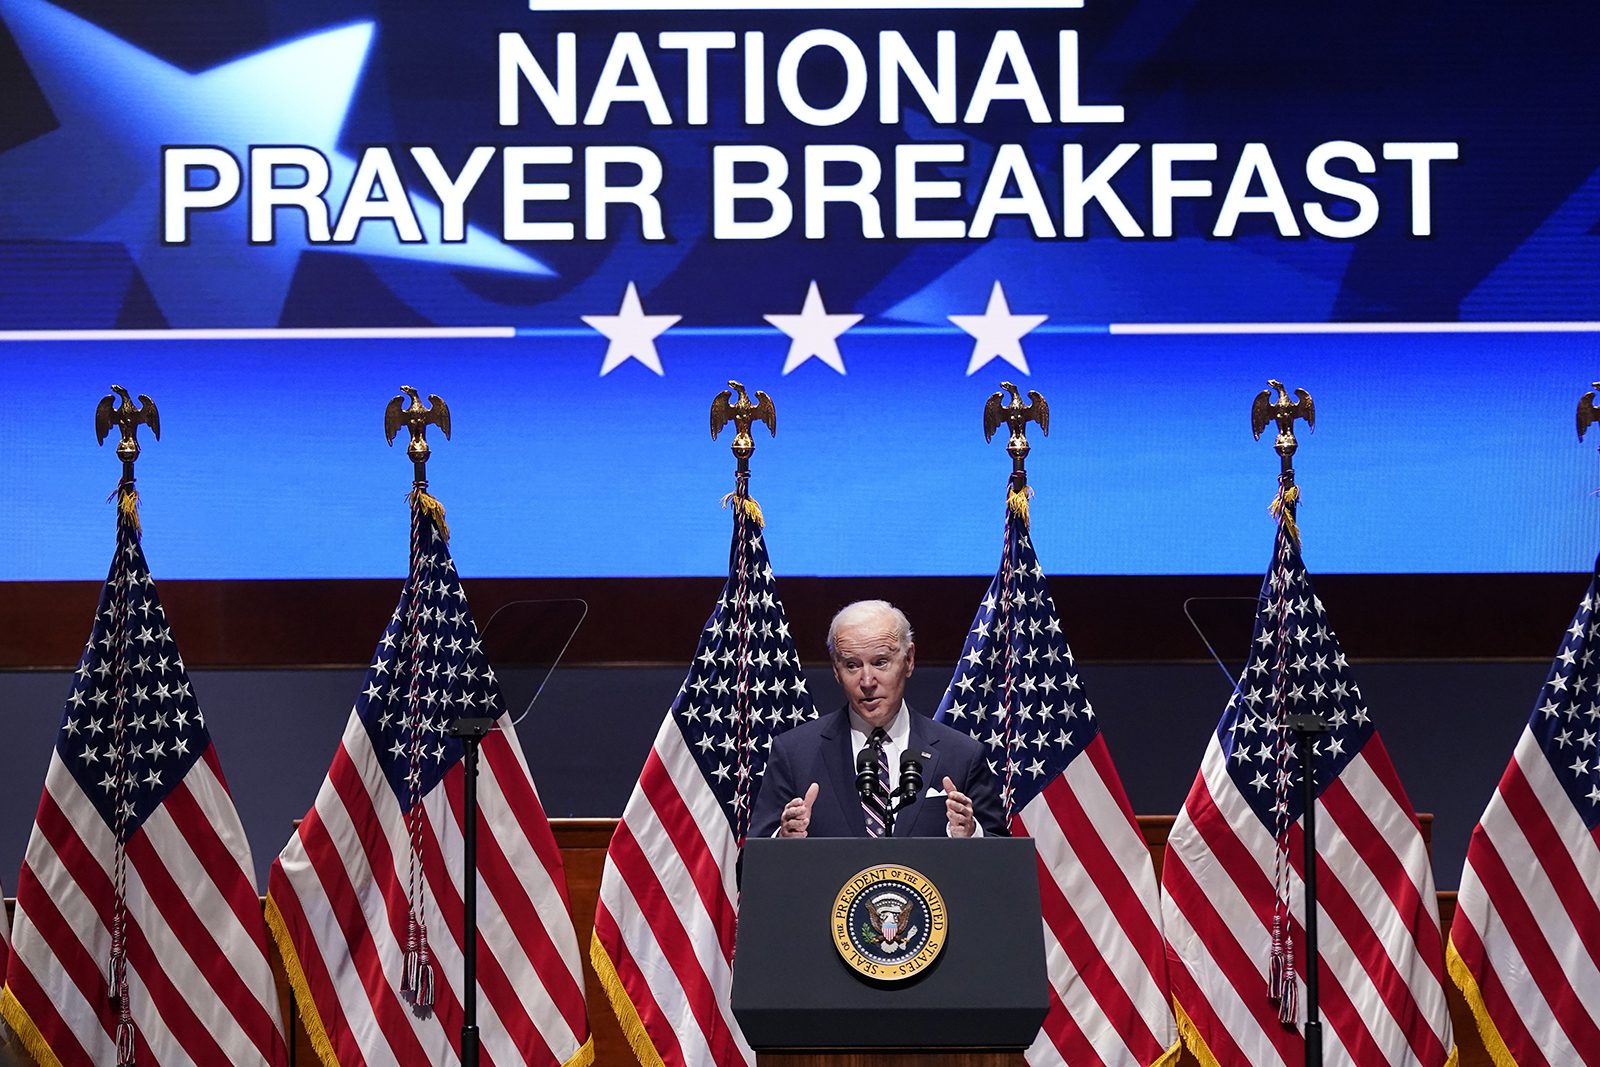 At National Prayer Breakfast, Biden Calls for Unity